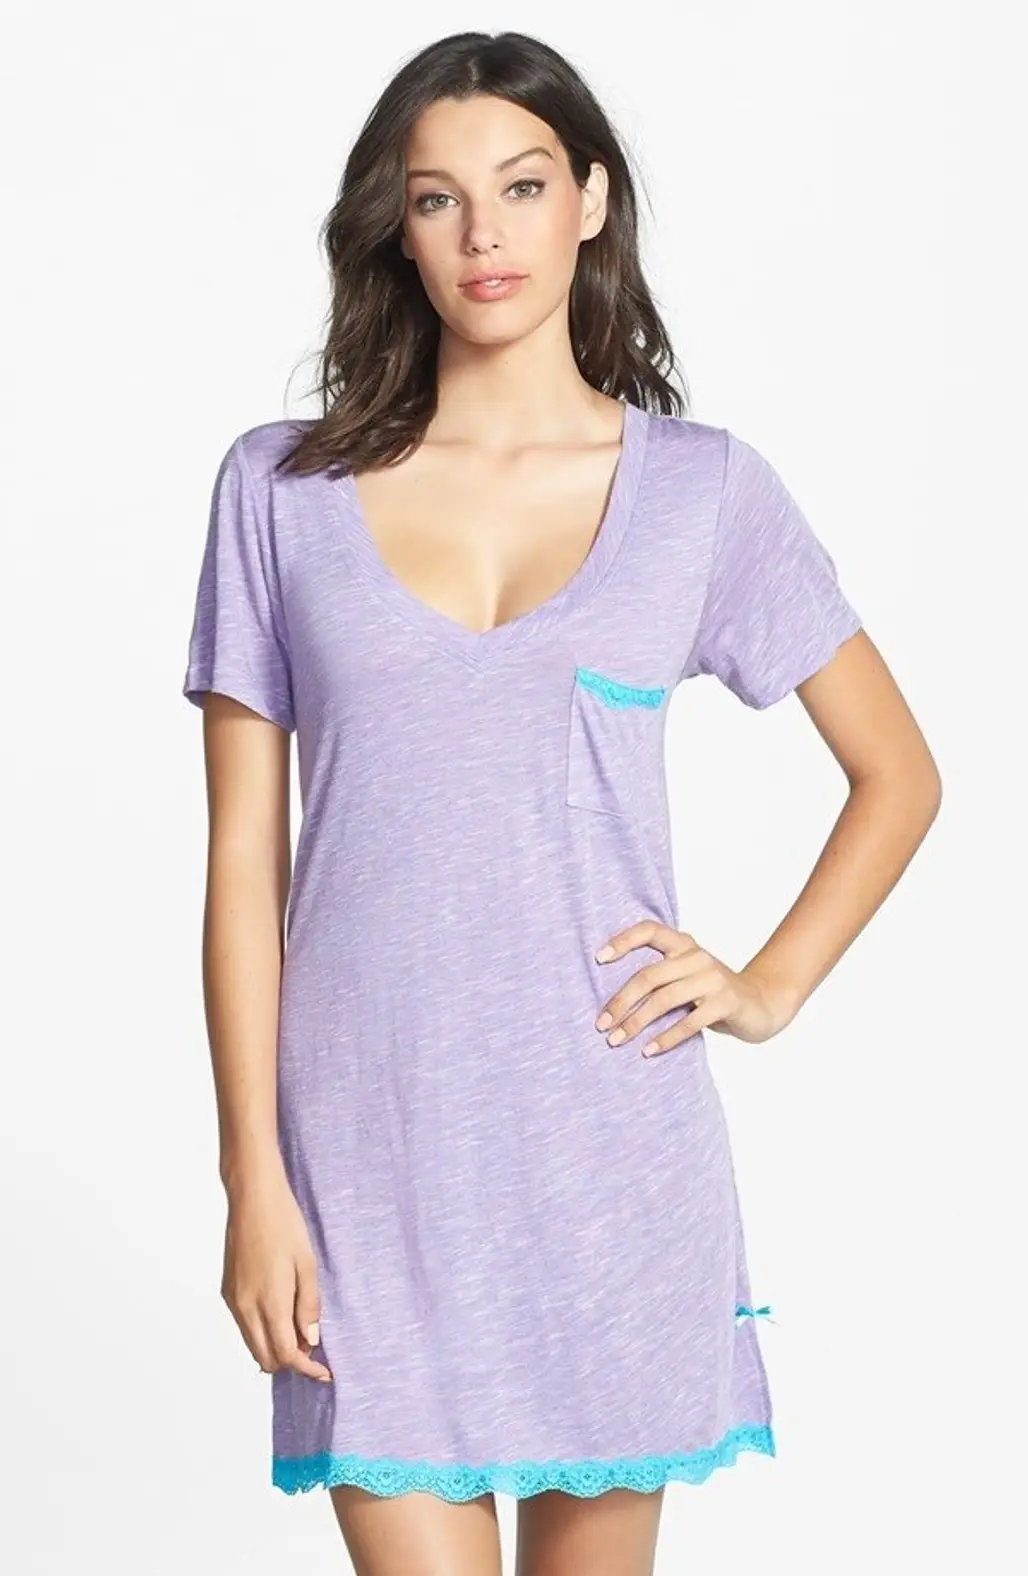 Lace Trim Sleep Shirt by Honeydew Intimates